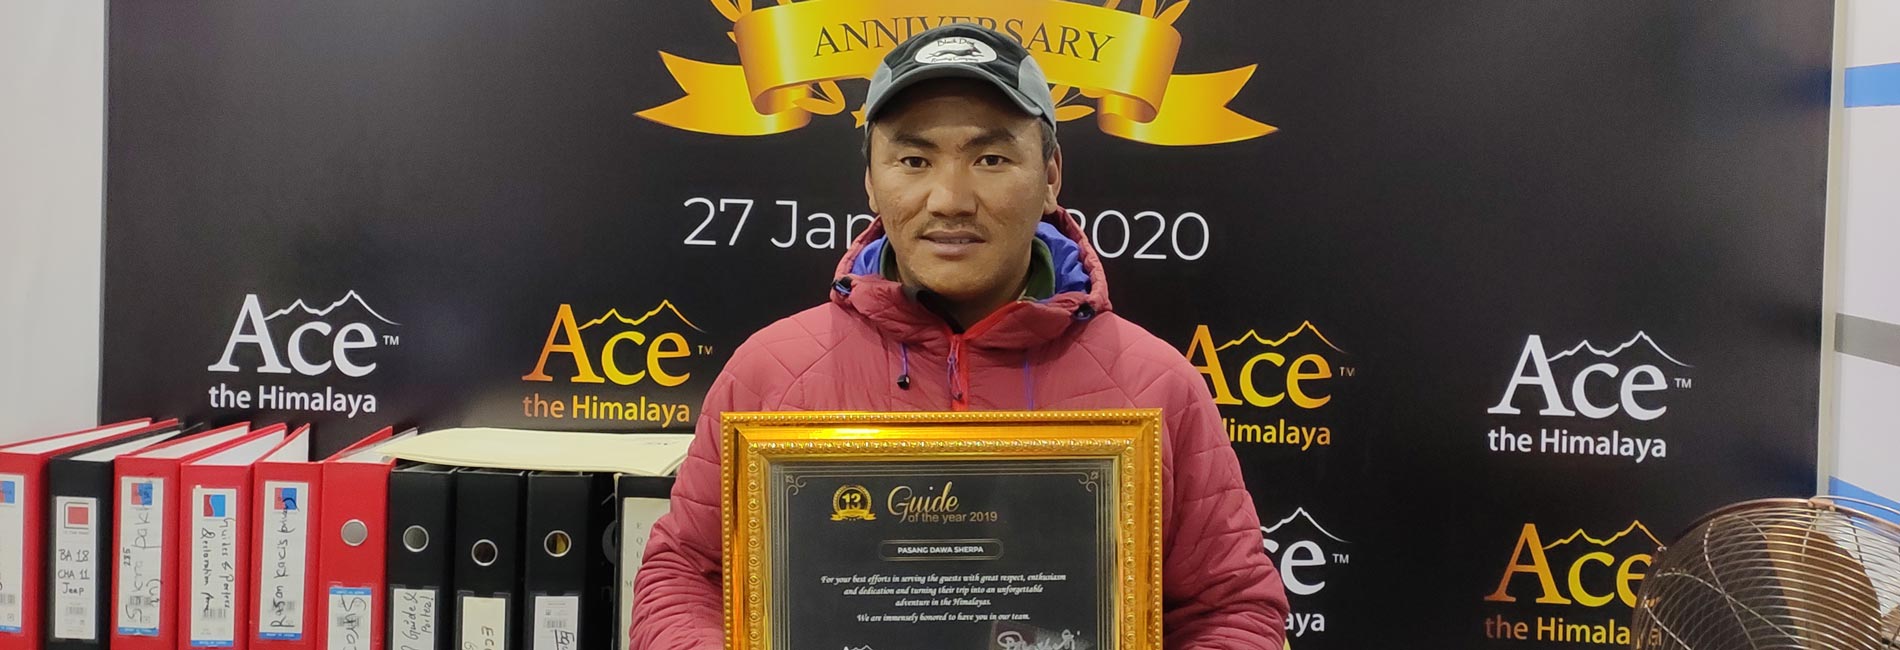 Guide of the Year Award at Ace the Himalaya